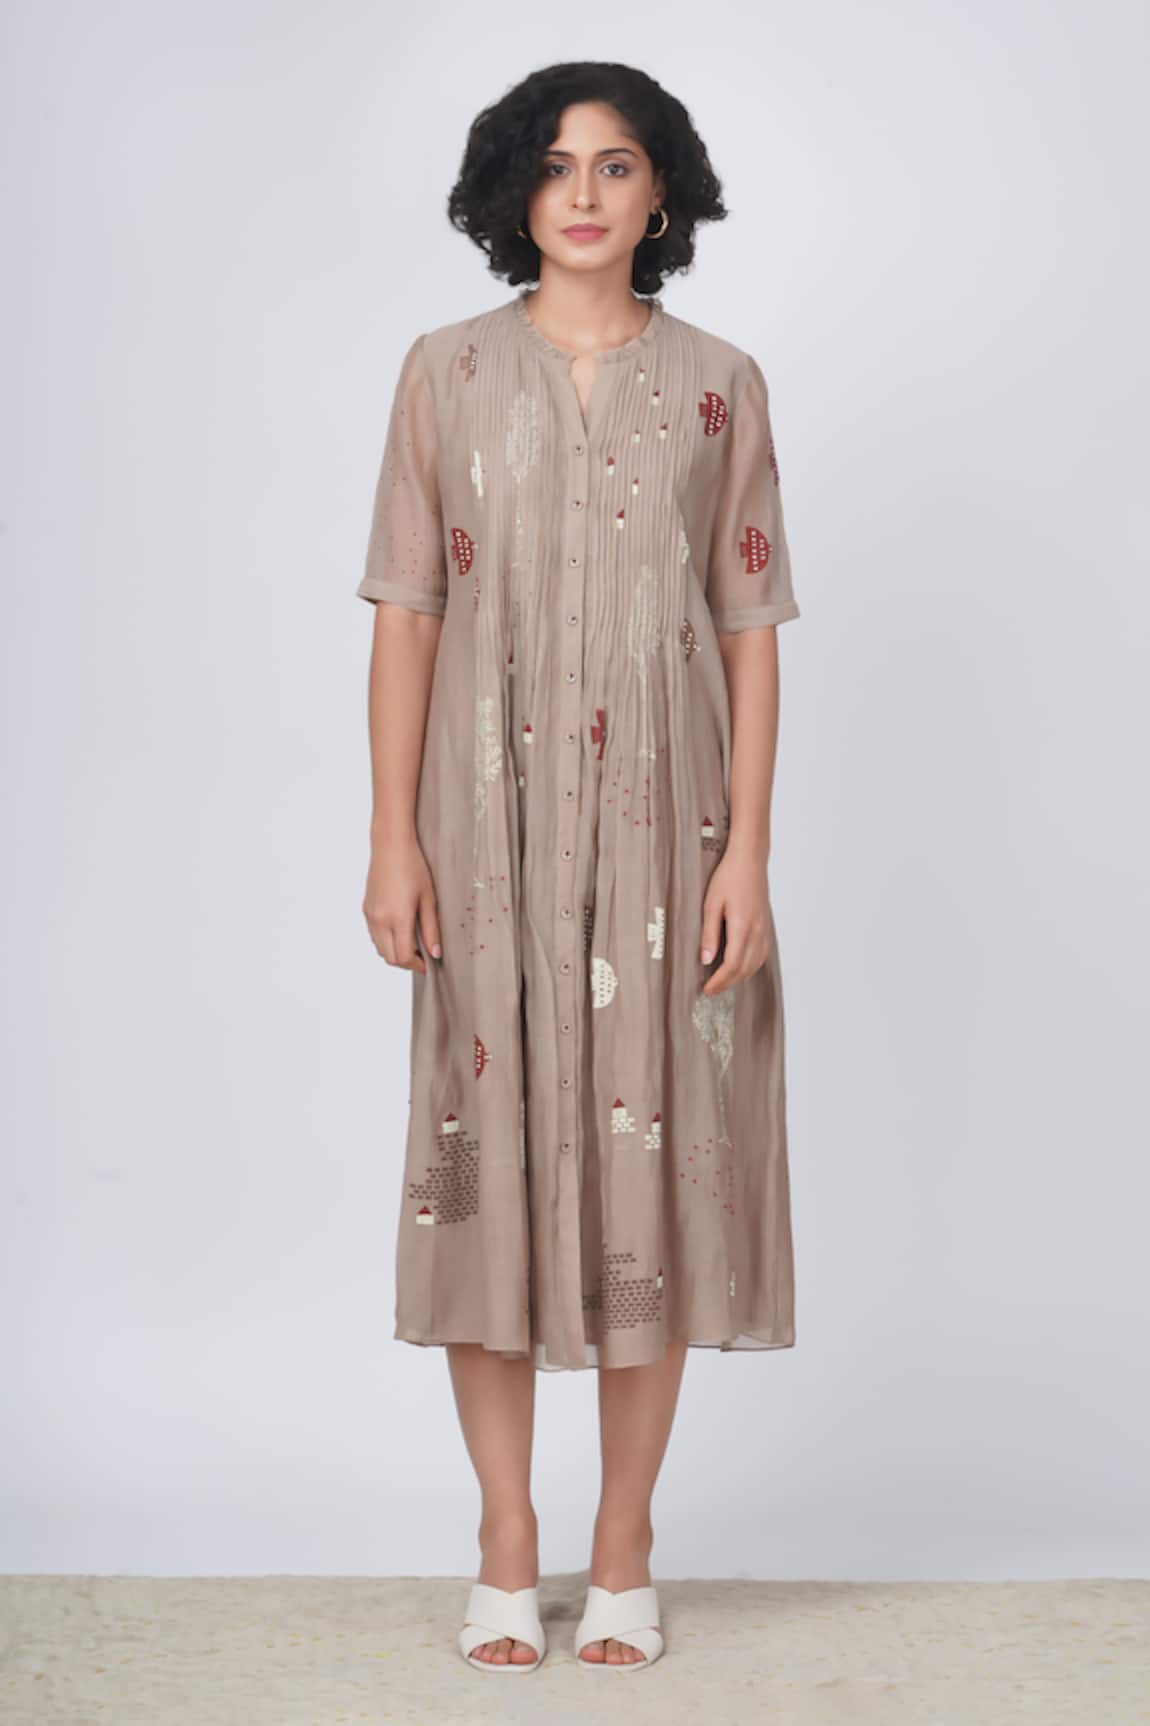 Arcvsh by Pallavi Singh Hakuna Print Pintucked Dress